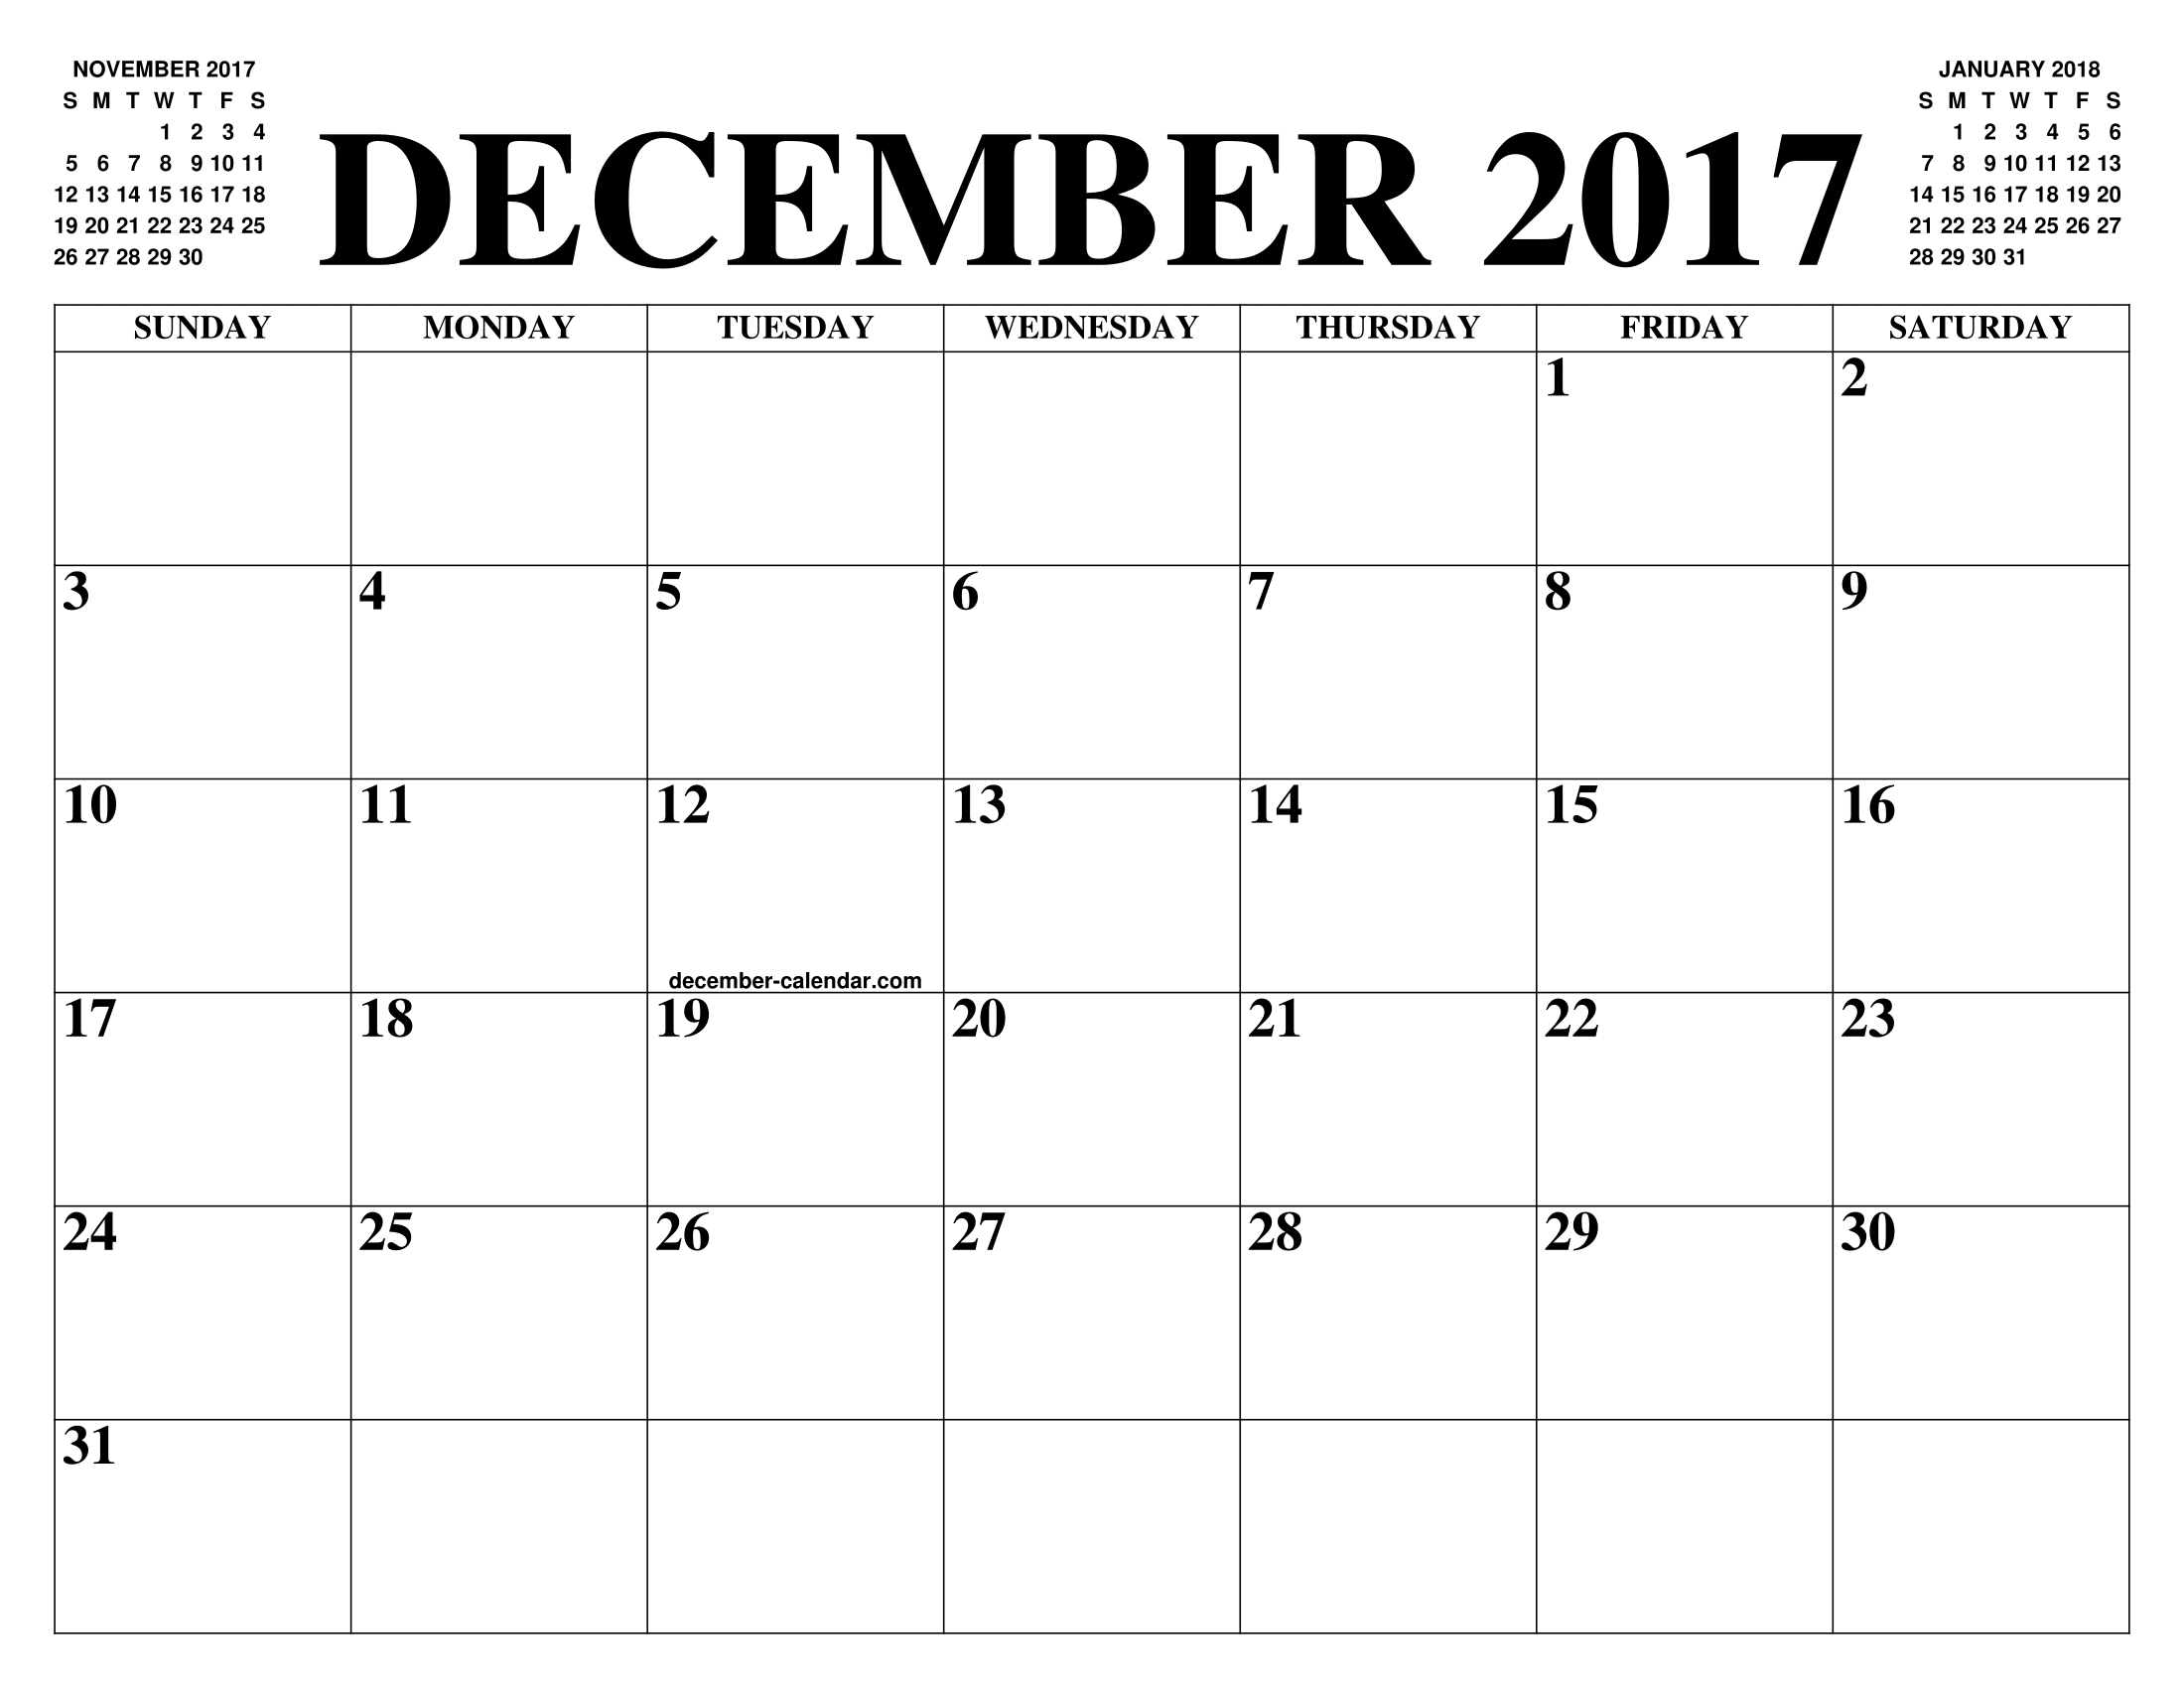 December, 2017